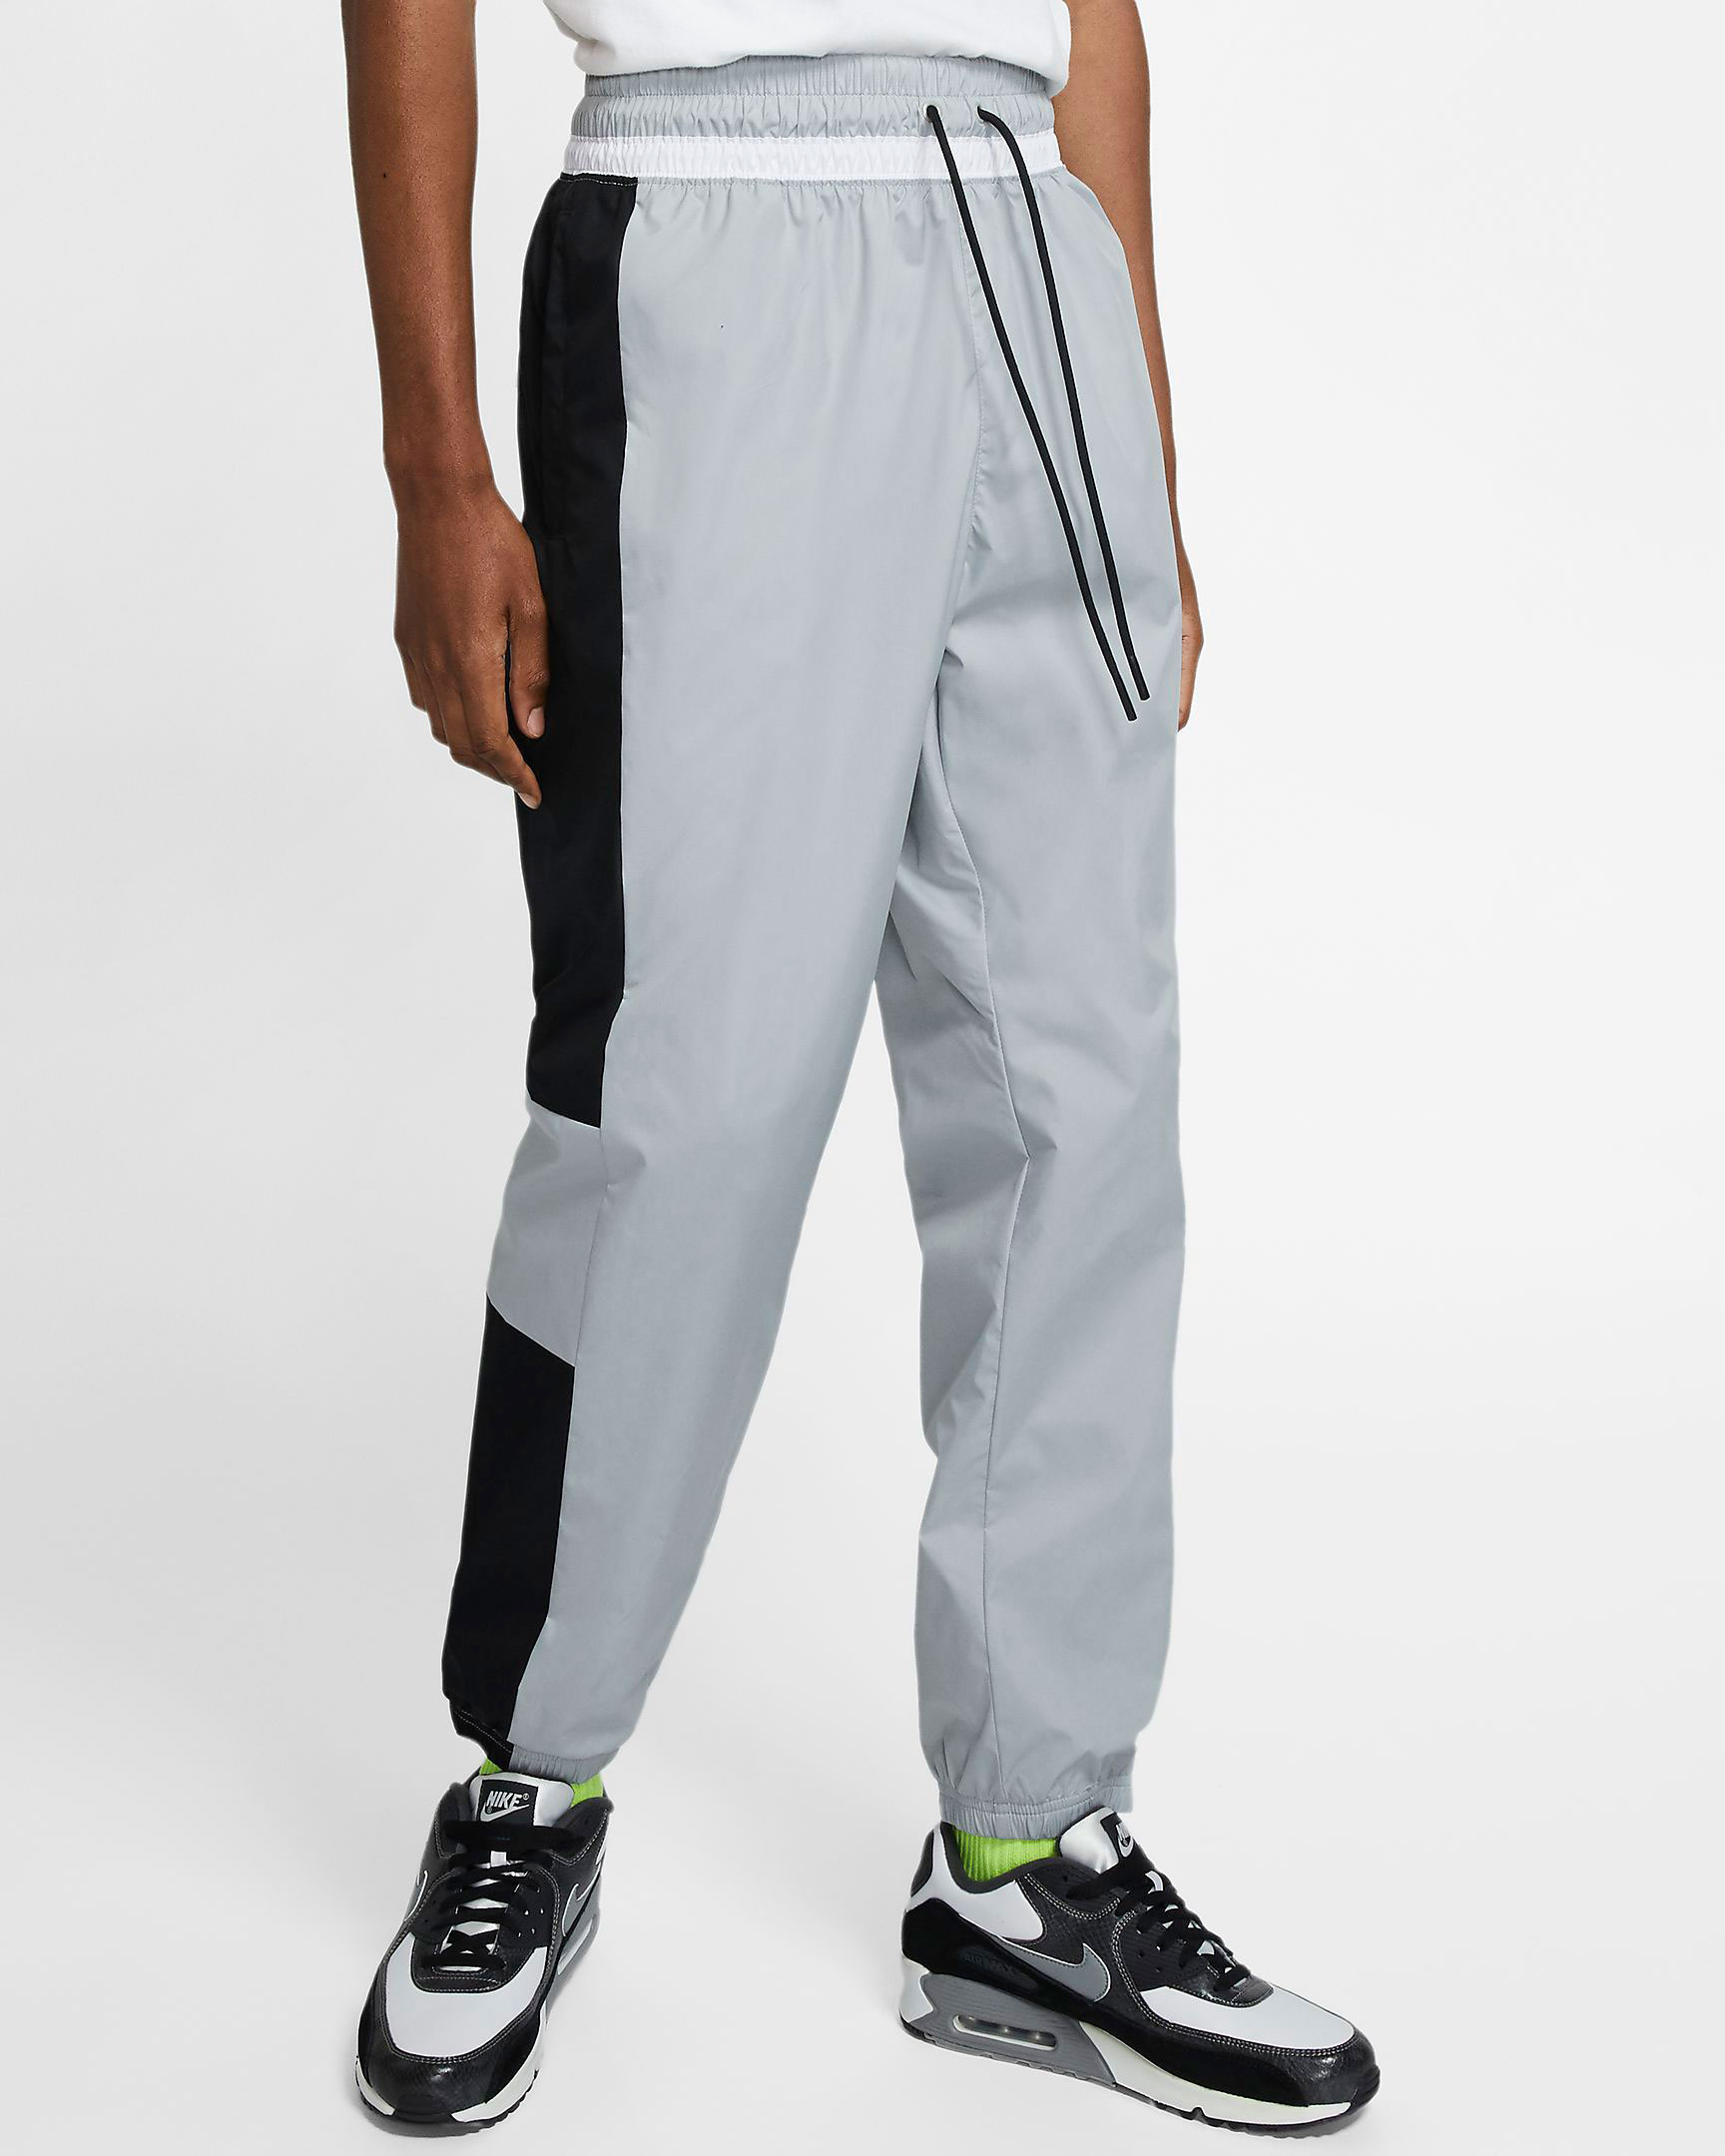 Air Jordan 4 Neon Apparel to Match | SneakerFits.com